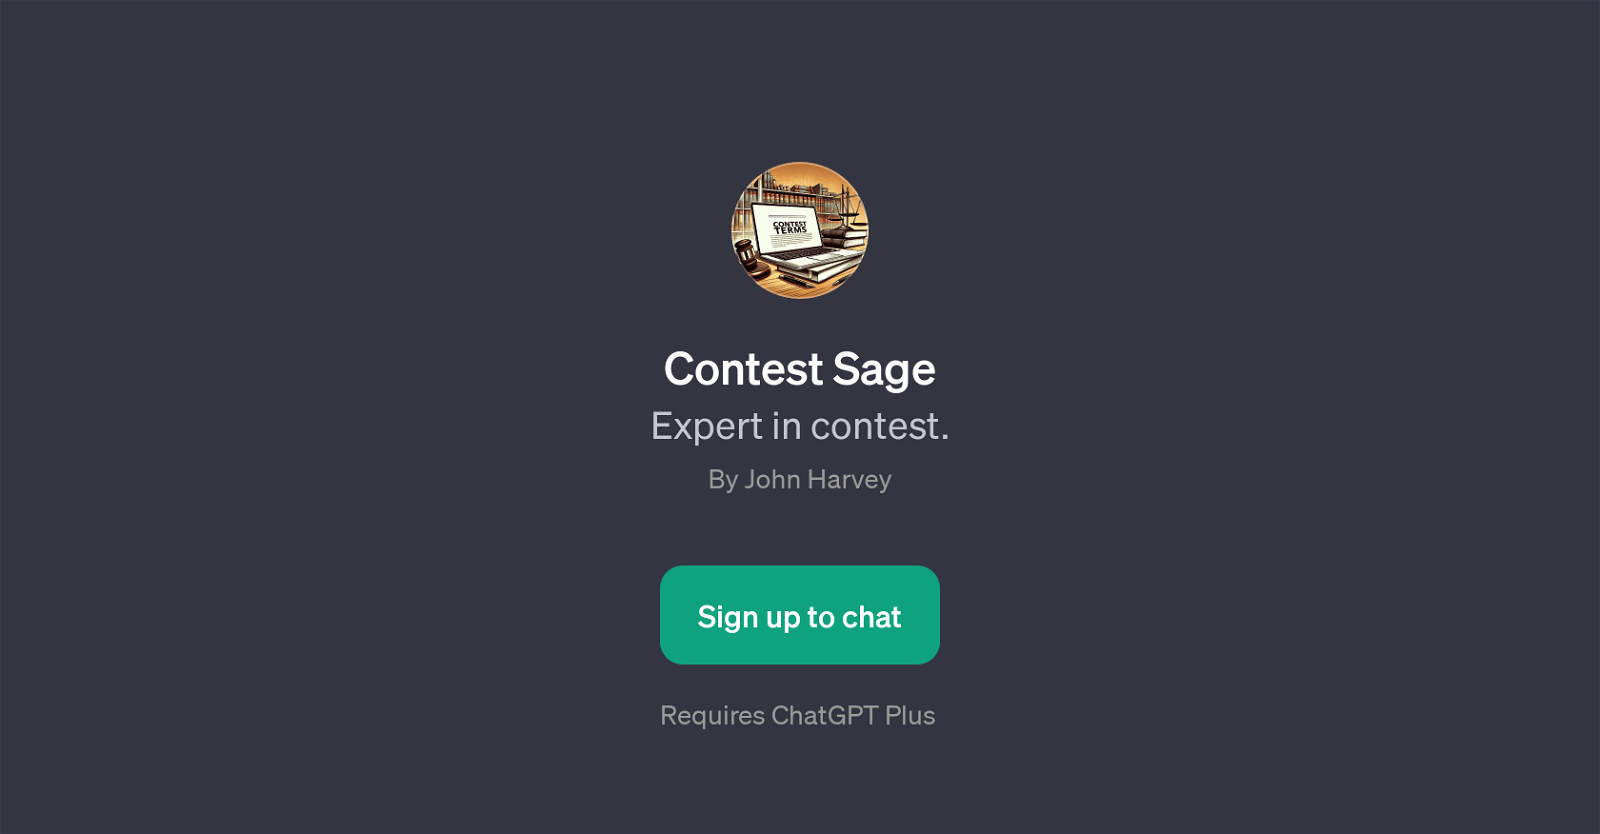 Contest Sage website